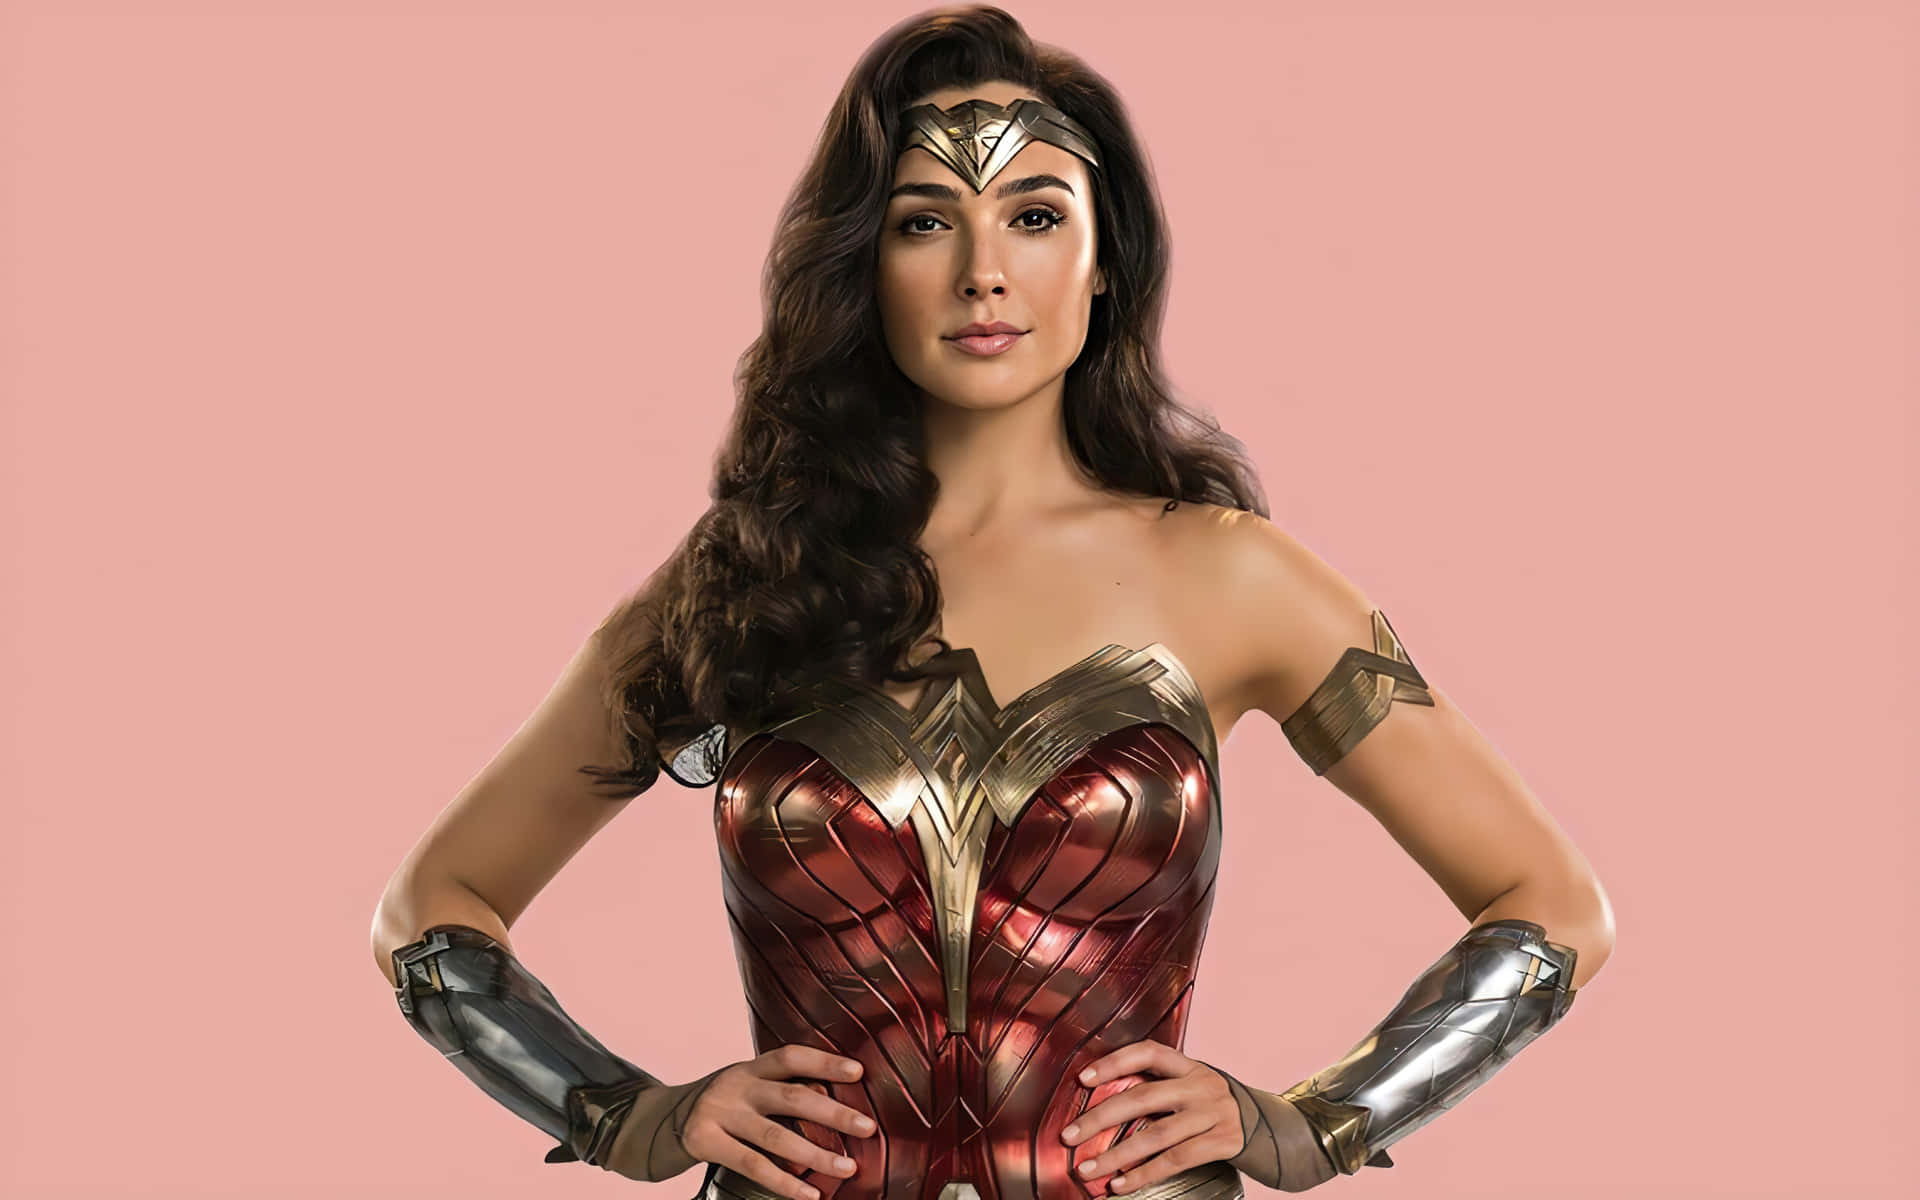 Gal Gadot personifies power as Wonder Woman